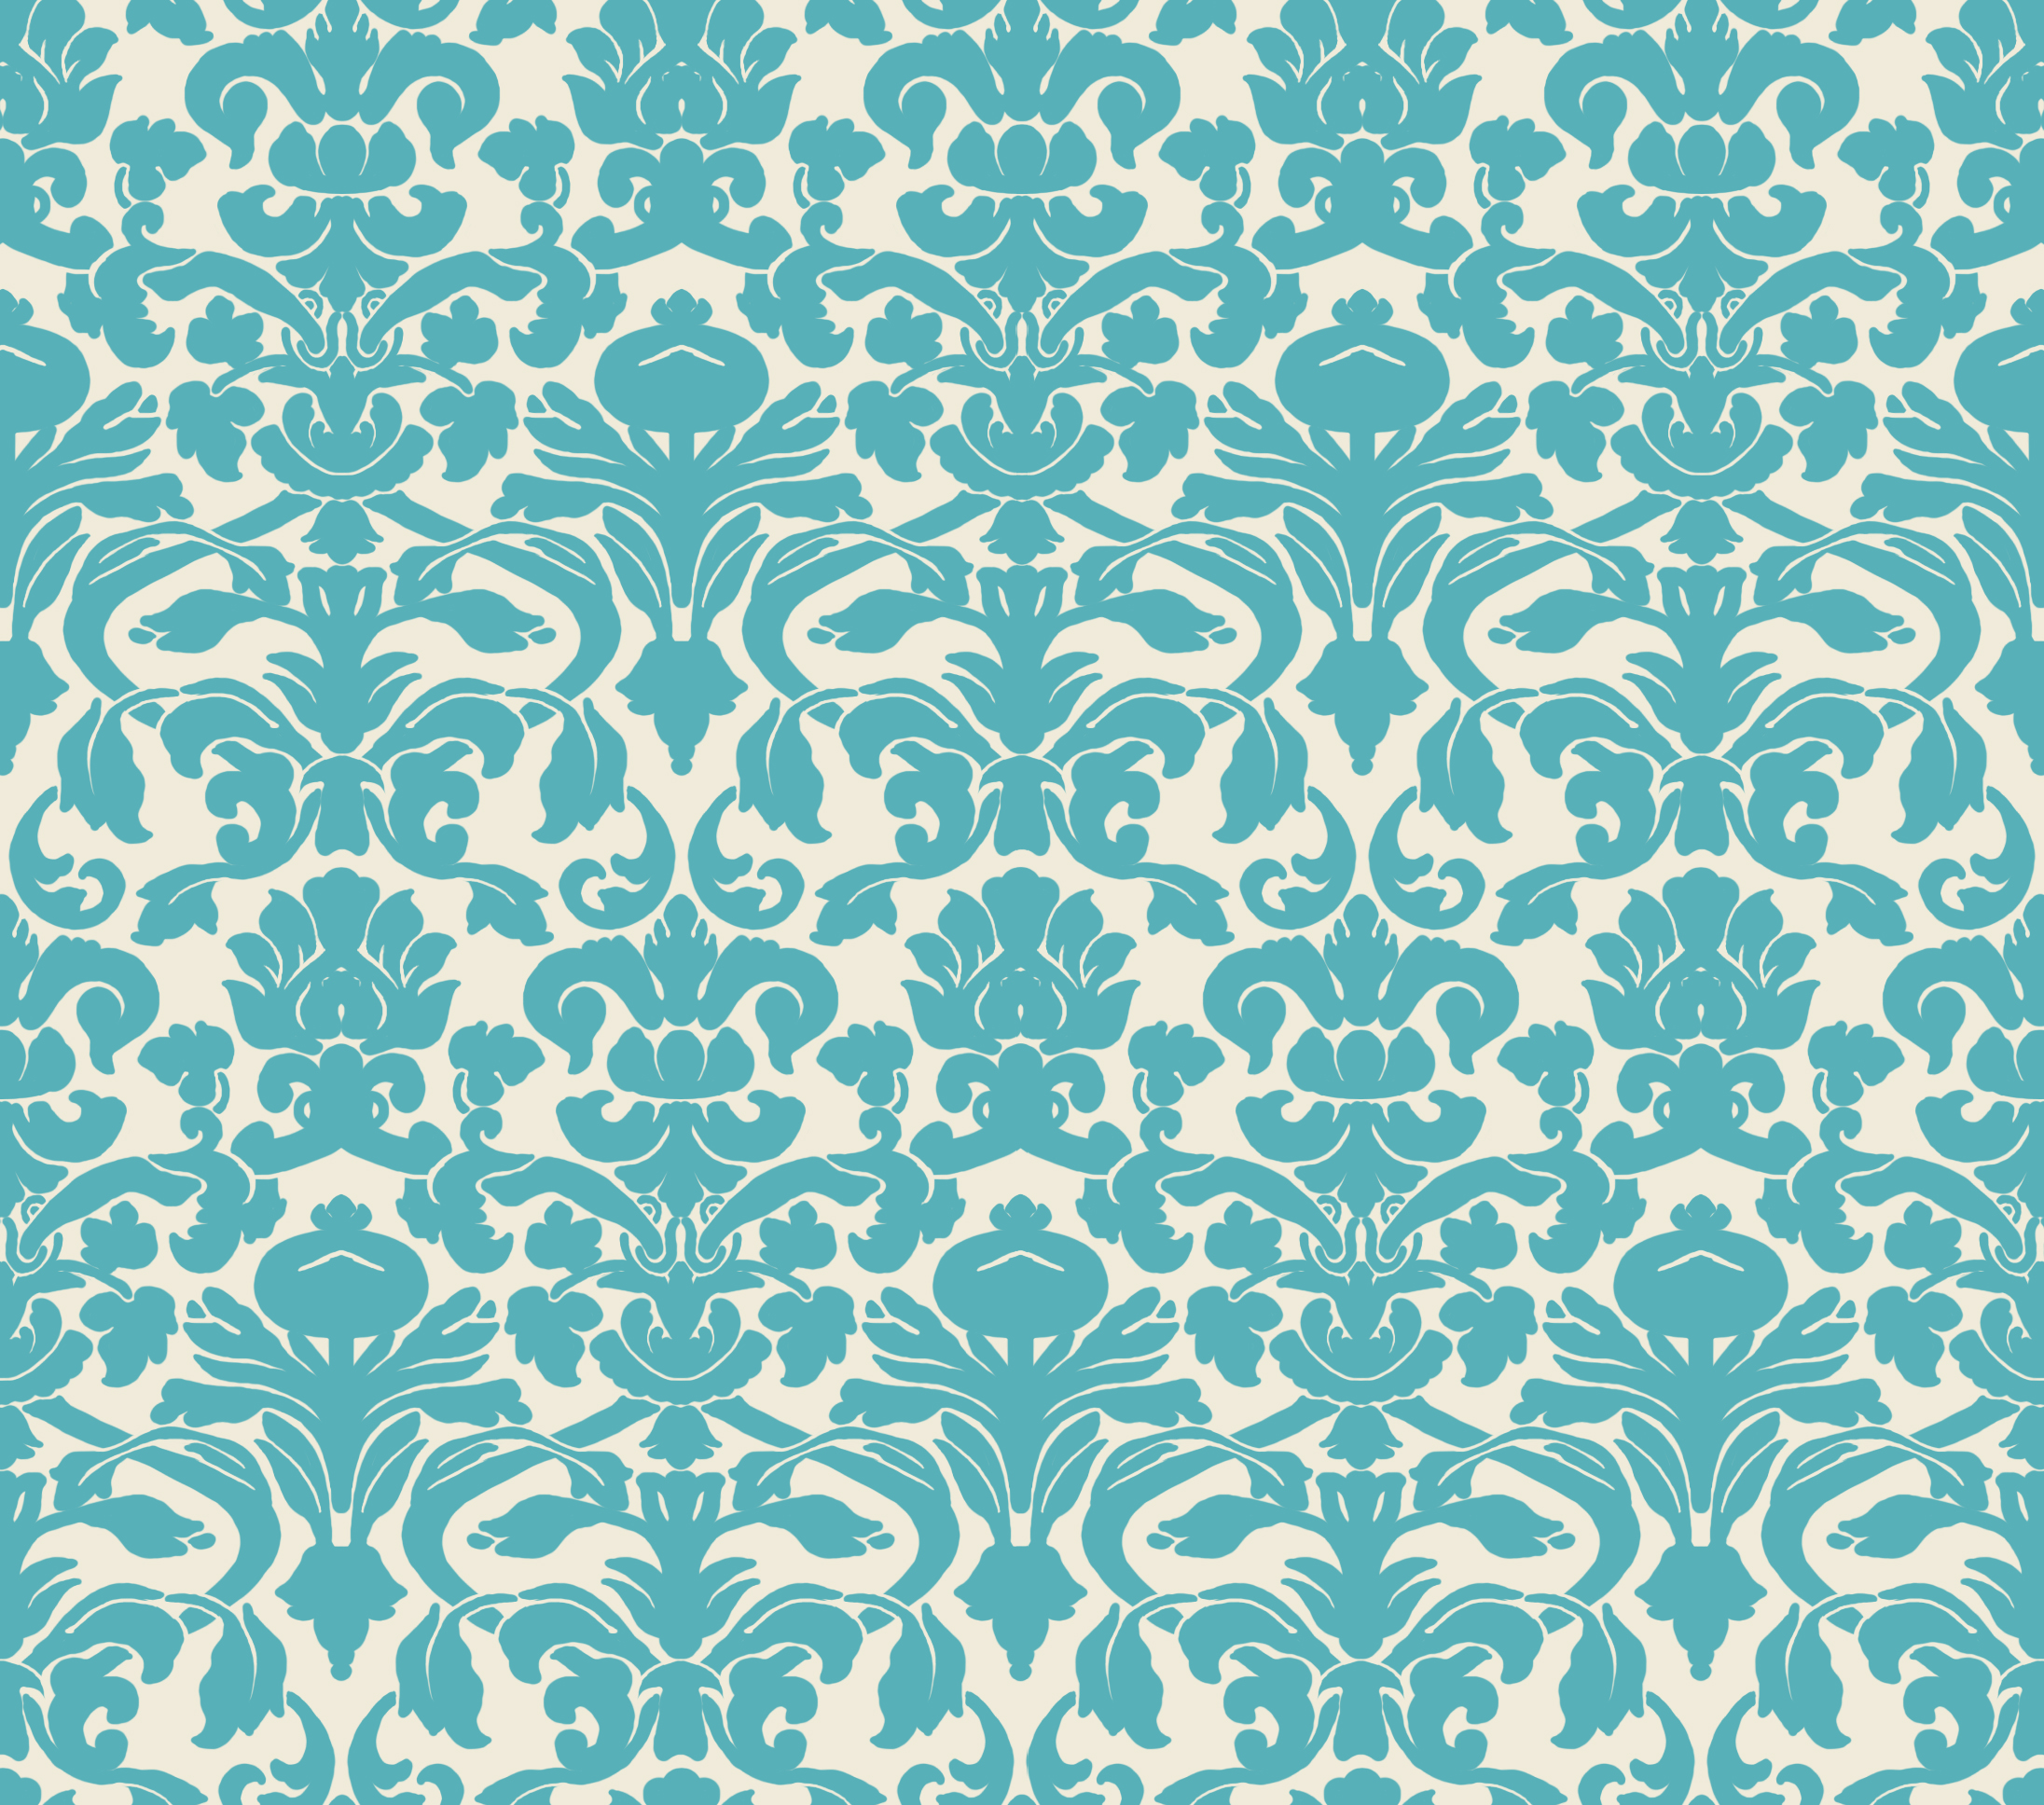  2015 insurrectionx ornate wallpaper pattern edges match up pattern can